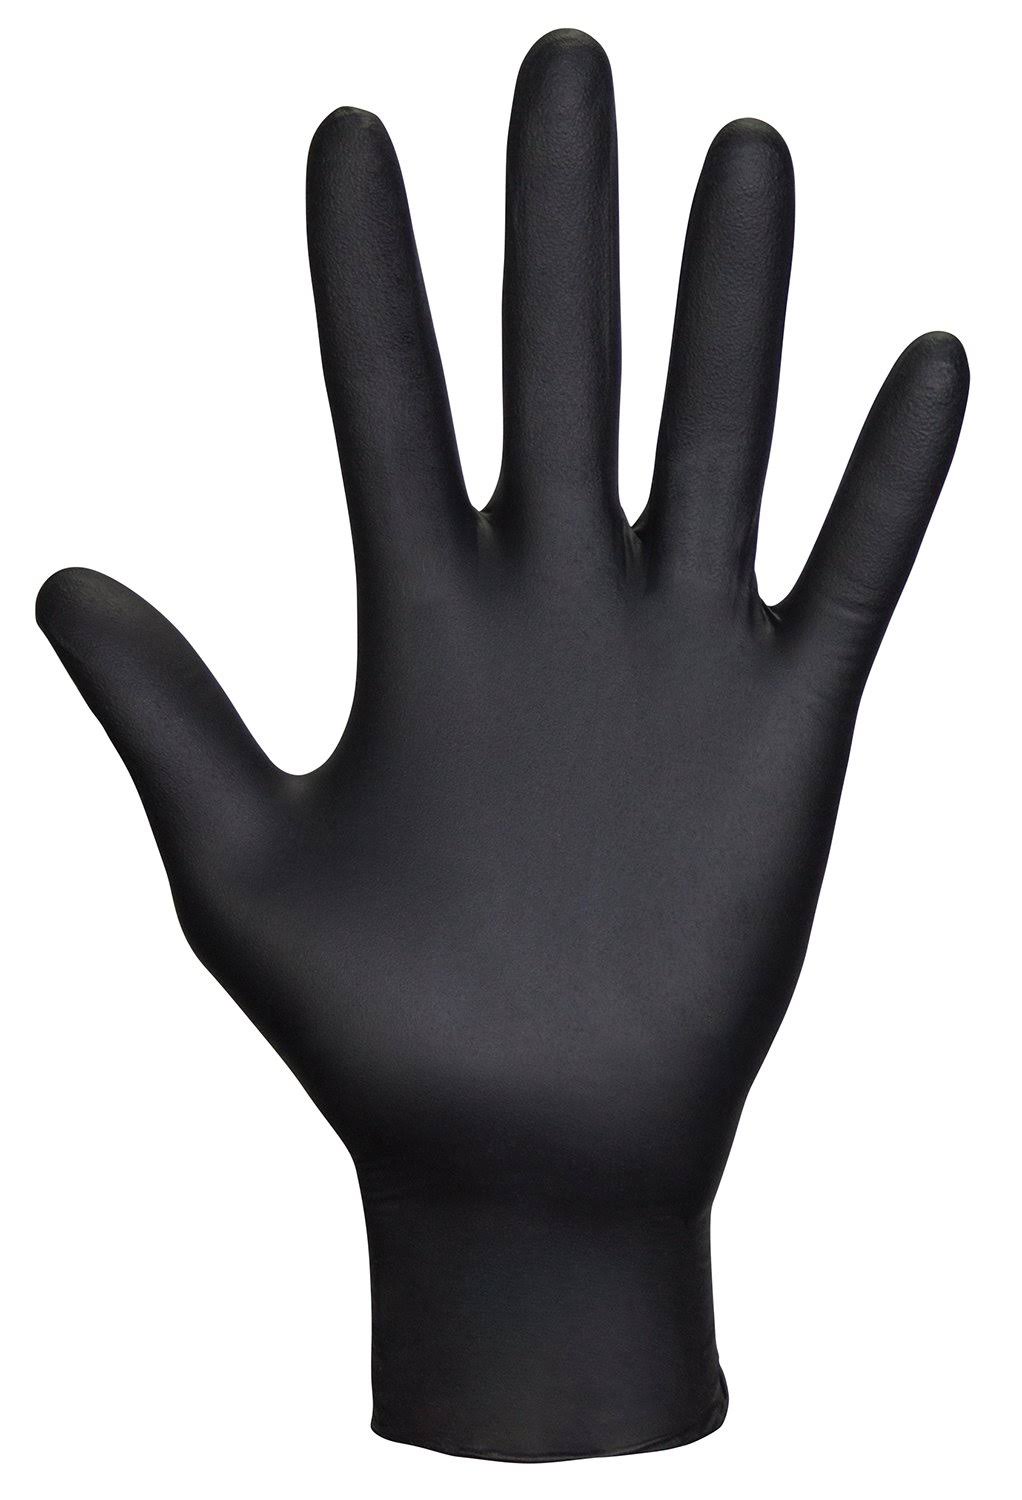 SAS Safety Raven Powder-Free Disposable Gloves - Extra Large, 100 Gloves, Black Nitrile, 6 Mil